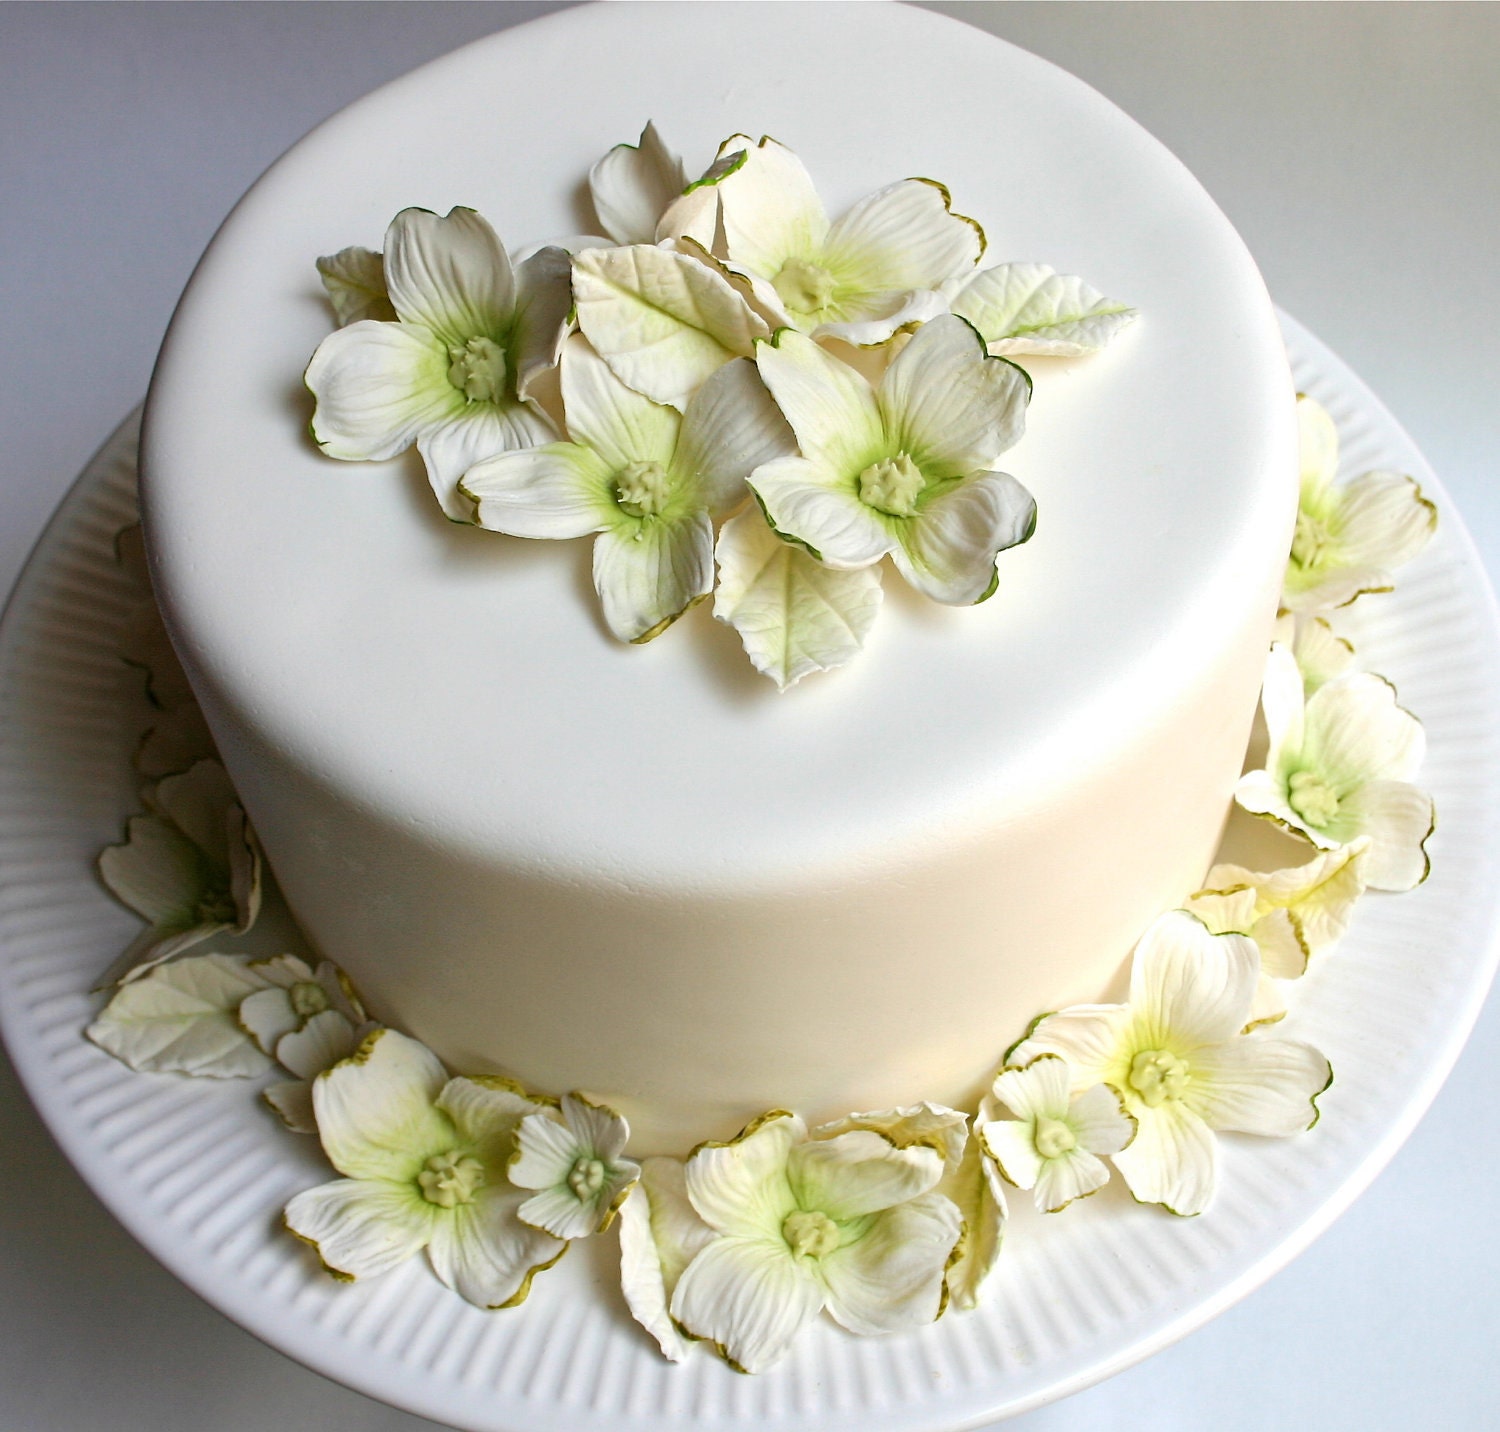 Wedding Cake Decoration : Edible Sugar Dogwood Blossoms and Leaves - Wedding Cake Flowers